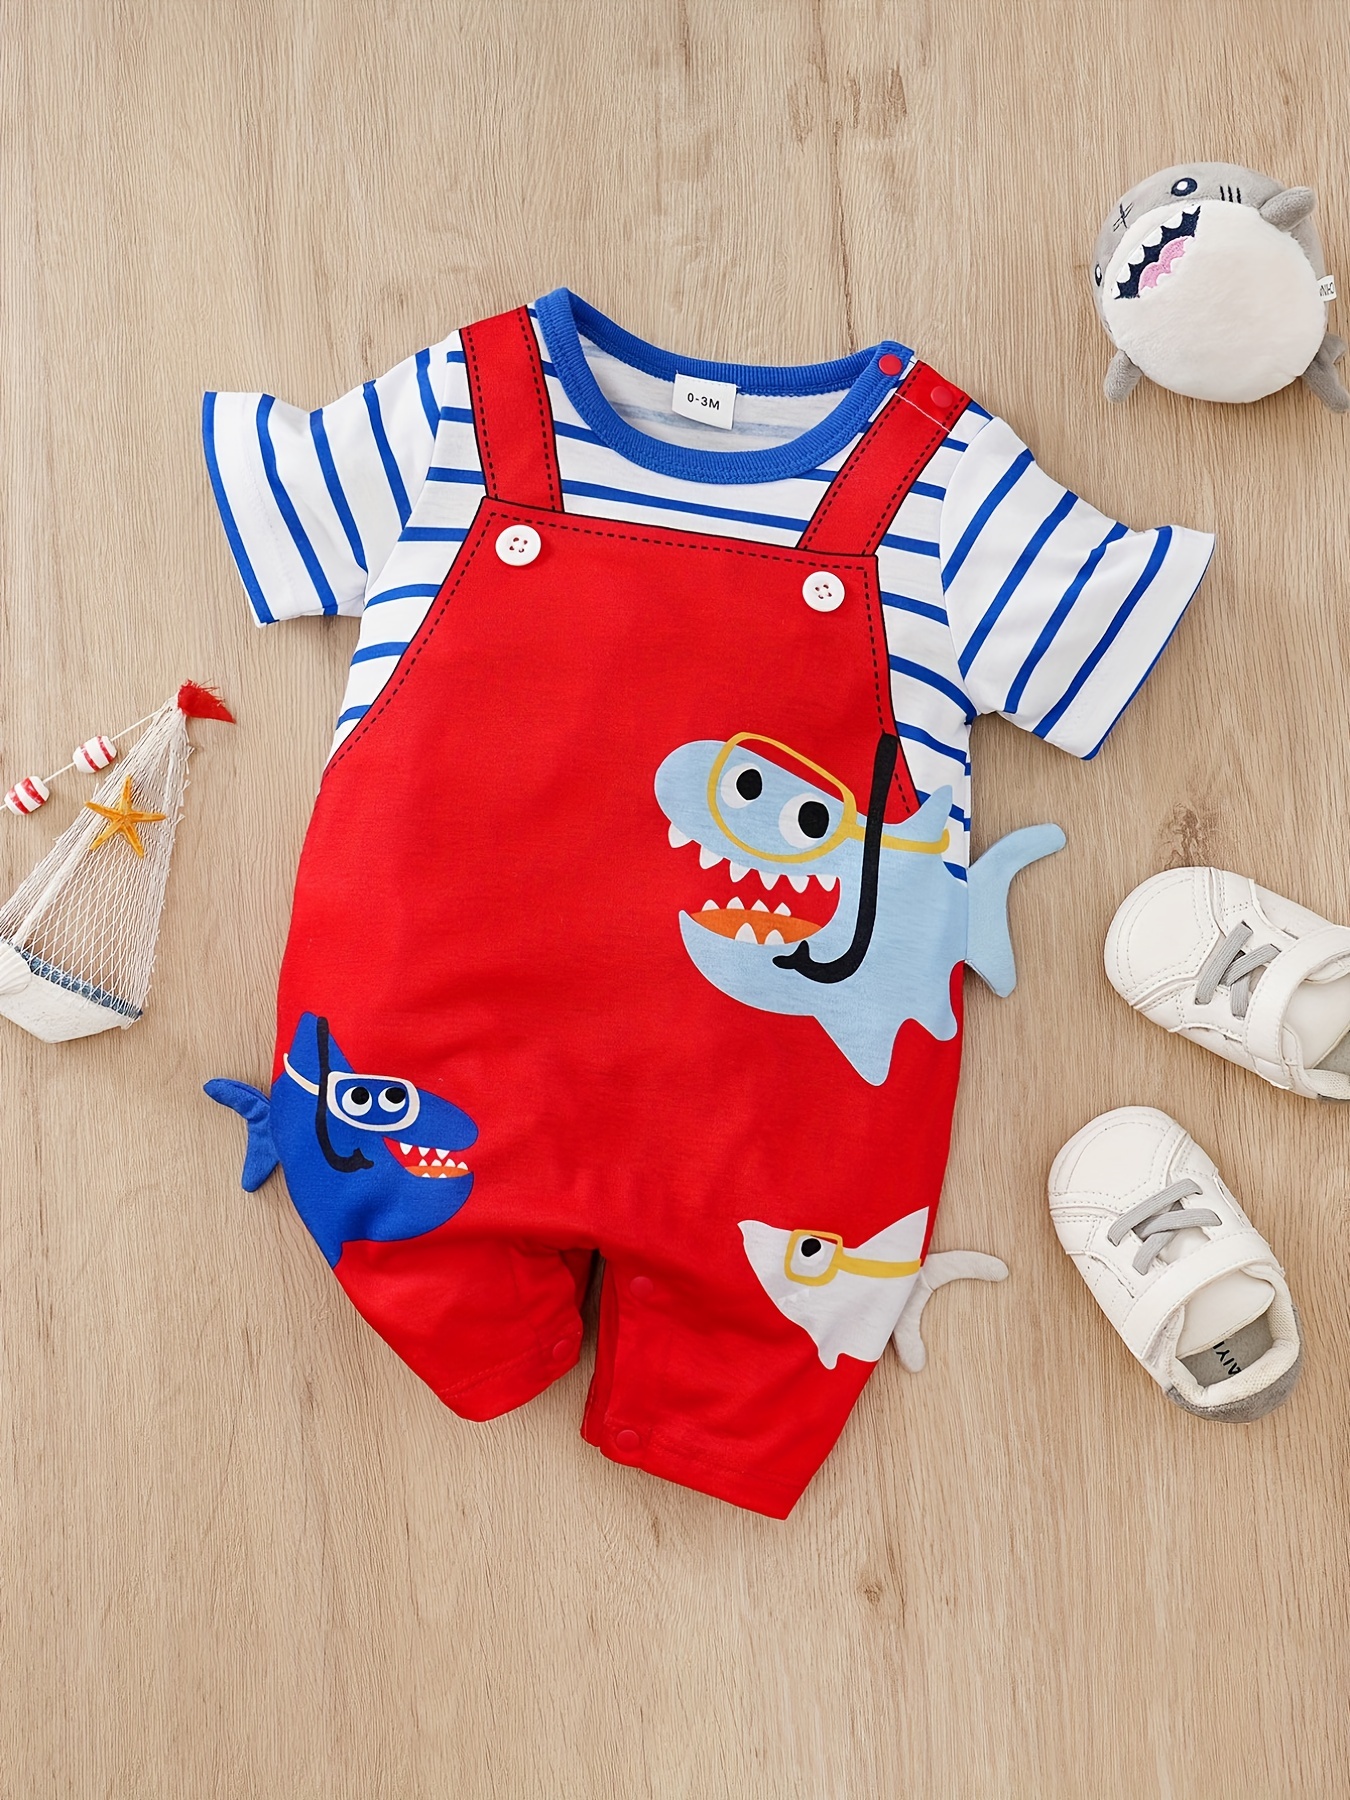 Multitrust Newborn Baby Boys Jumpsuit Checkerboard Plaid Print Short Sleeve Romper Bodysuit Playsuit Outfit Summer Clothes, Infant Unisex, Size: 0-6